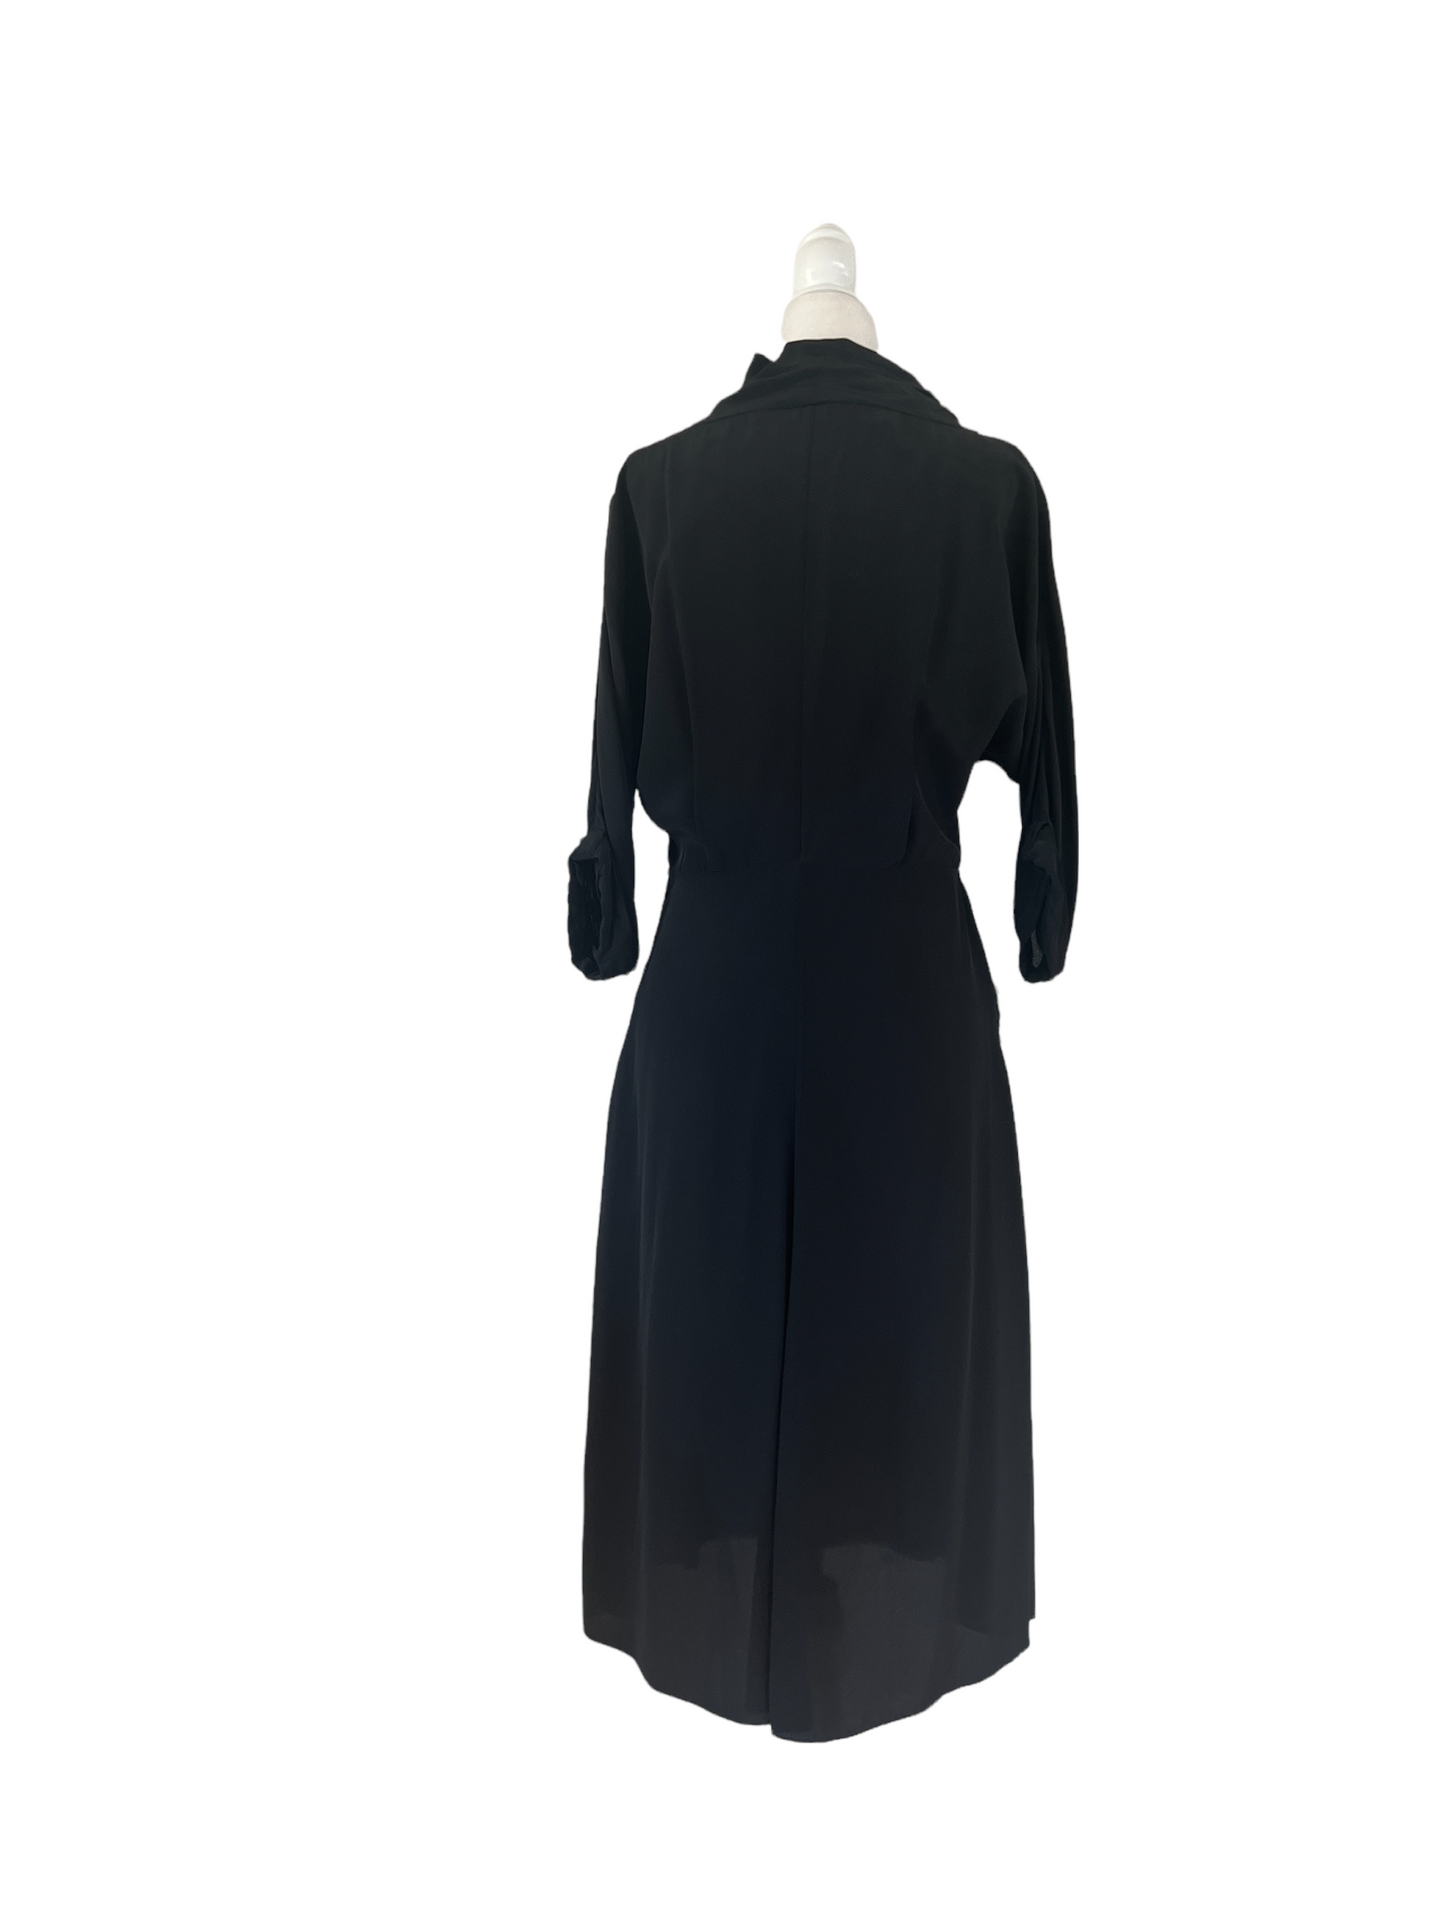 Black Silk Dress - S